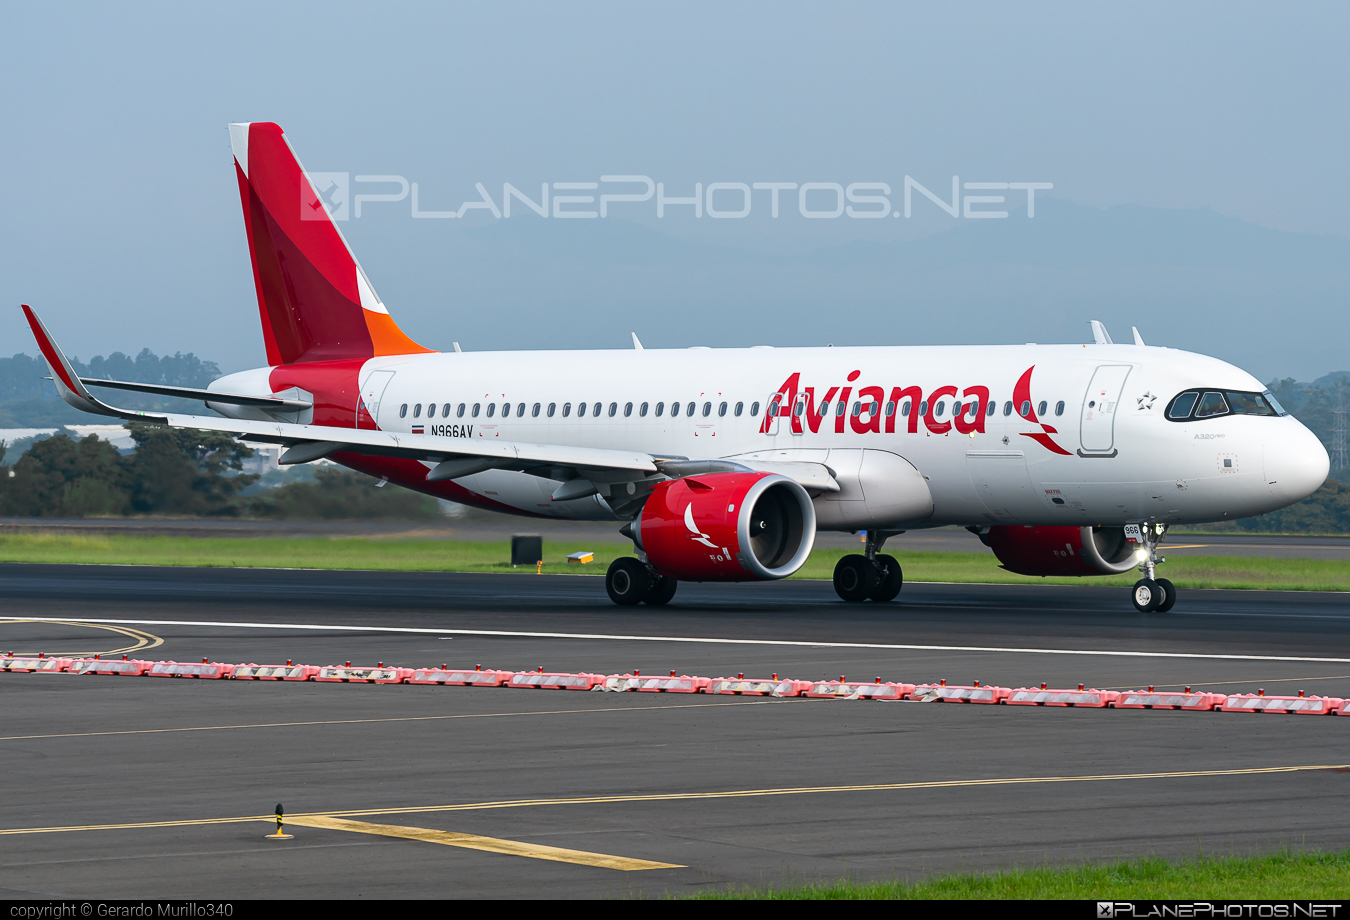 Airbus A320-251N - N966AV operated by Avianca Costa Rica #AviancaCostaRica #a320 #a320family #a320neo #airbus #airbus320 #avianca